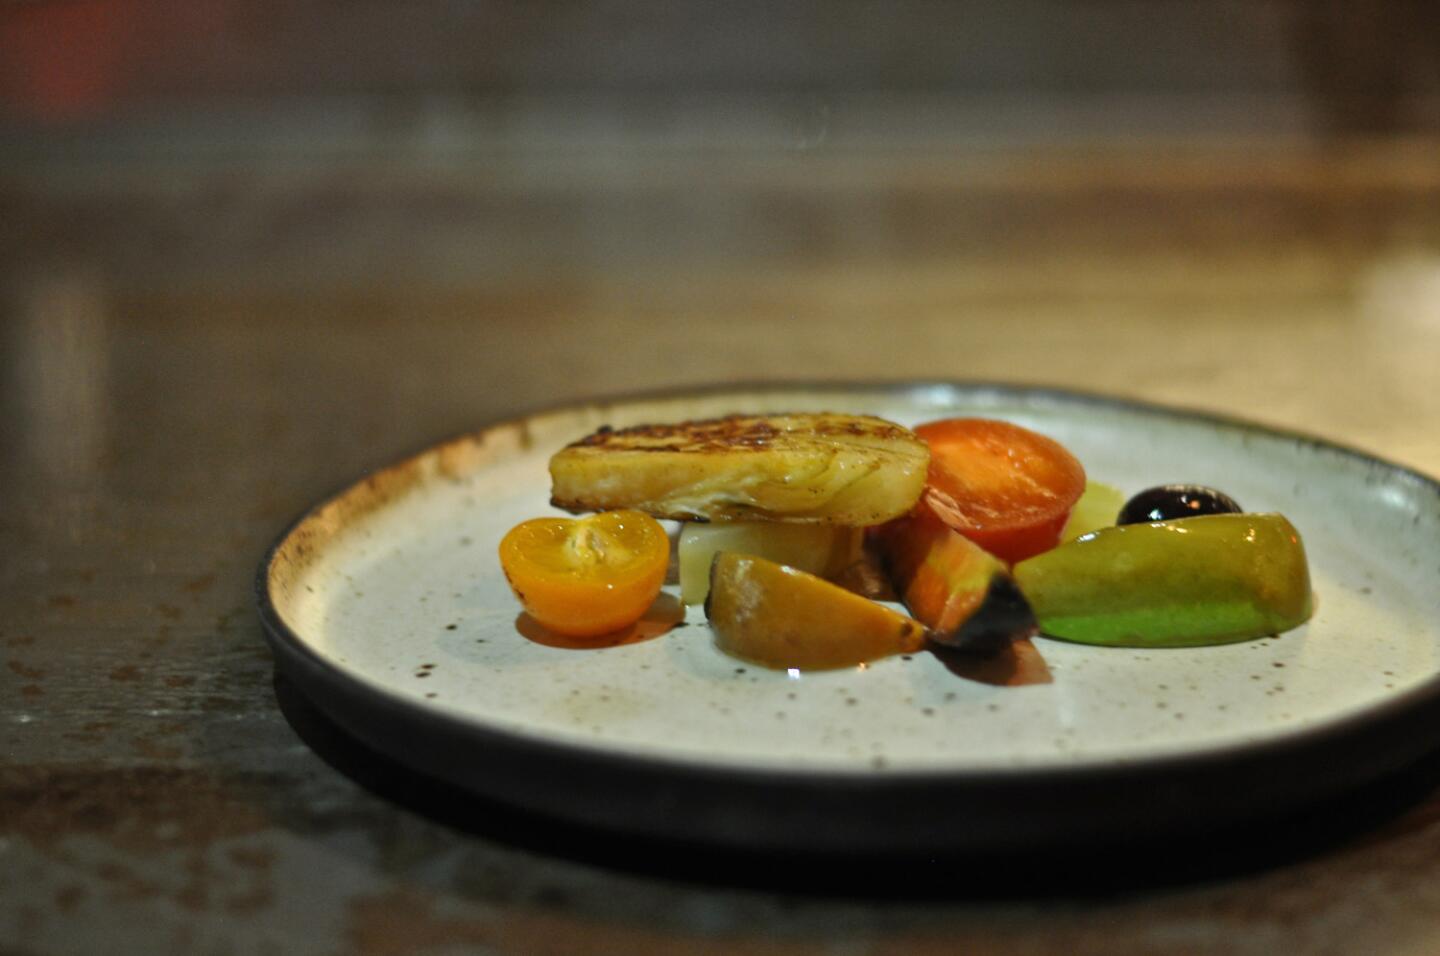 Gary Menes' vegetable and fruit plate at Le Comptoir.